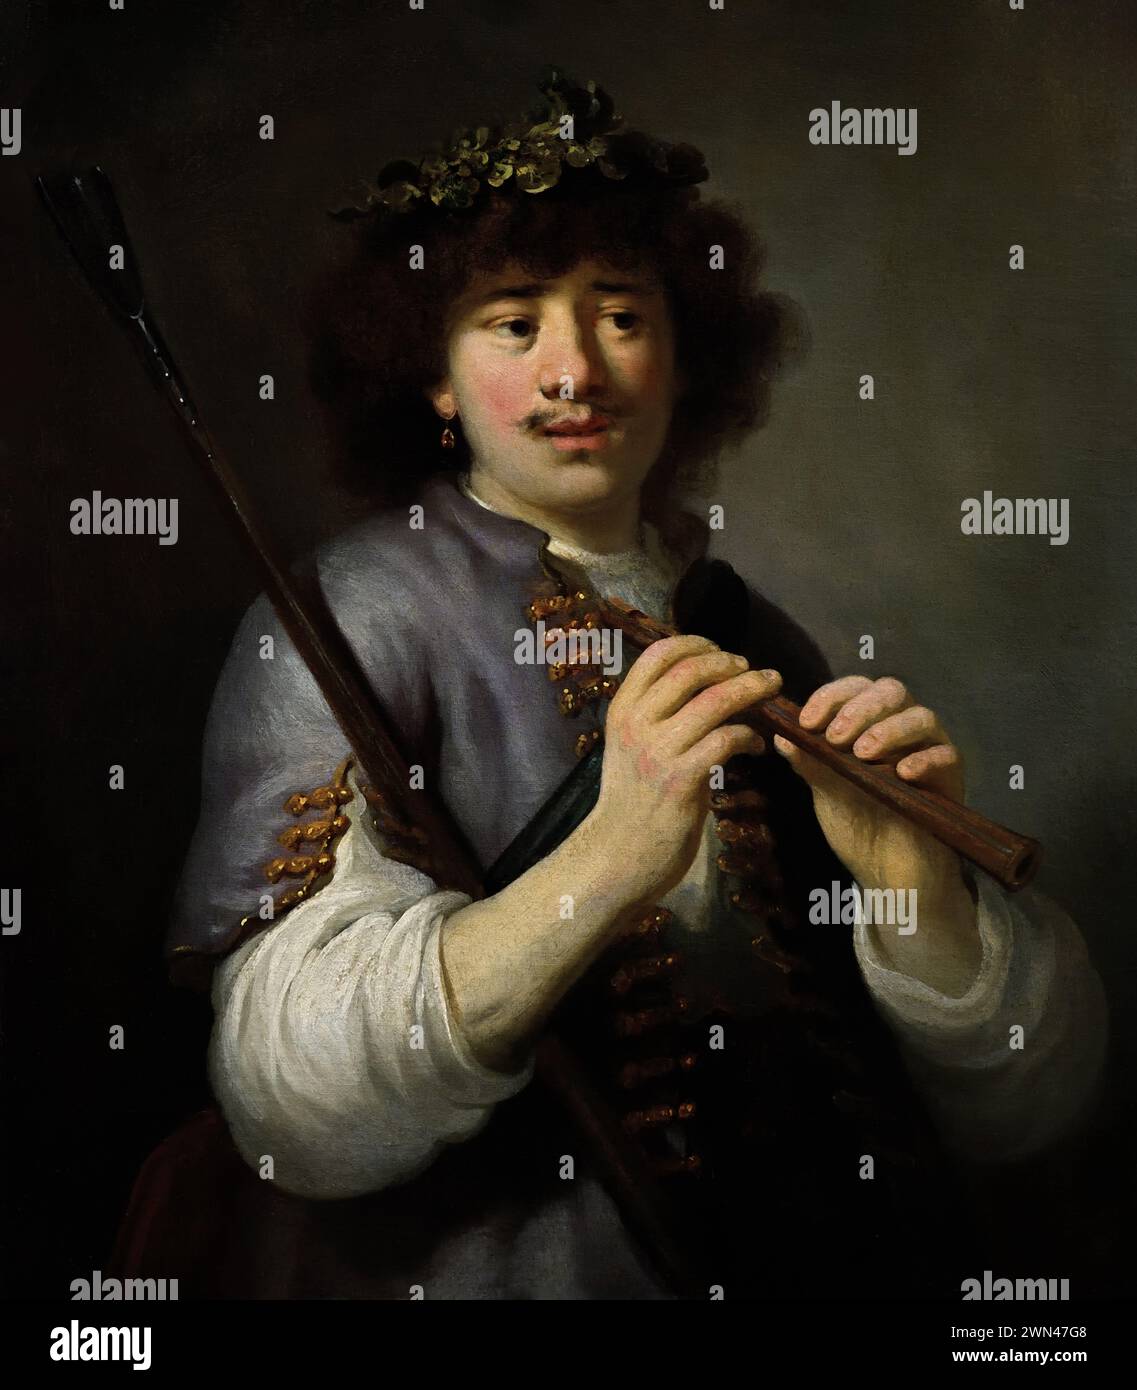 Rembrandt come pastore con personale e flauto 1636 Govert Flinck 1615- 1660, Paesi Bassi, Olanda, Royal Museum of fine Arts, Anversa, Belgio, Belgio. Rembrandt Harmensz (Harmenszoon) van Rijn Foto Stock